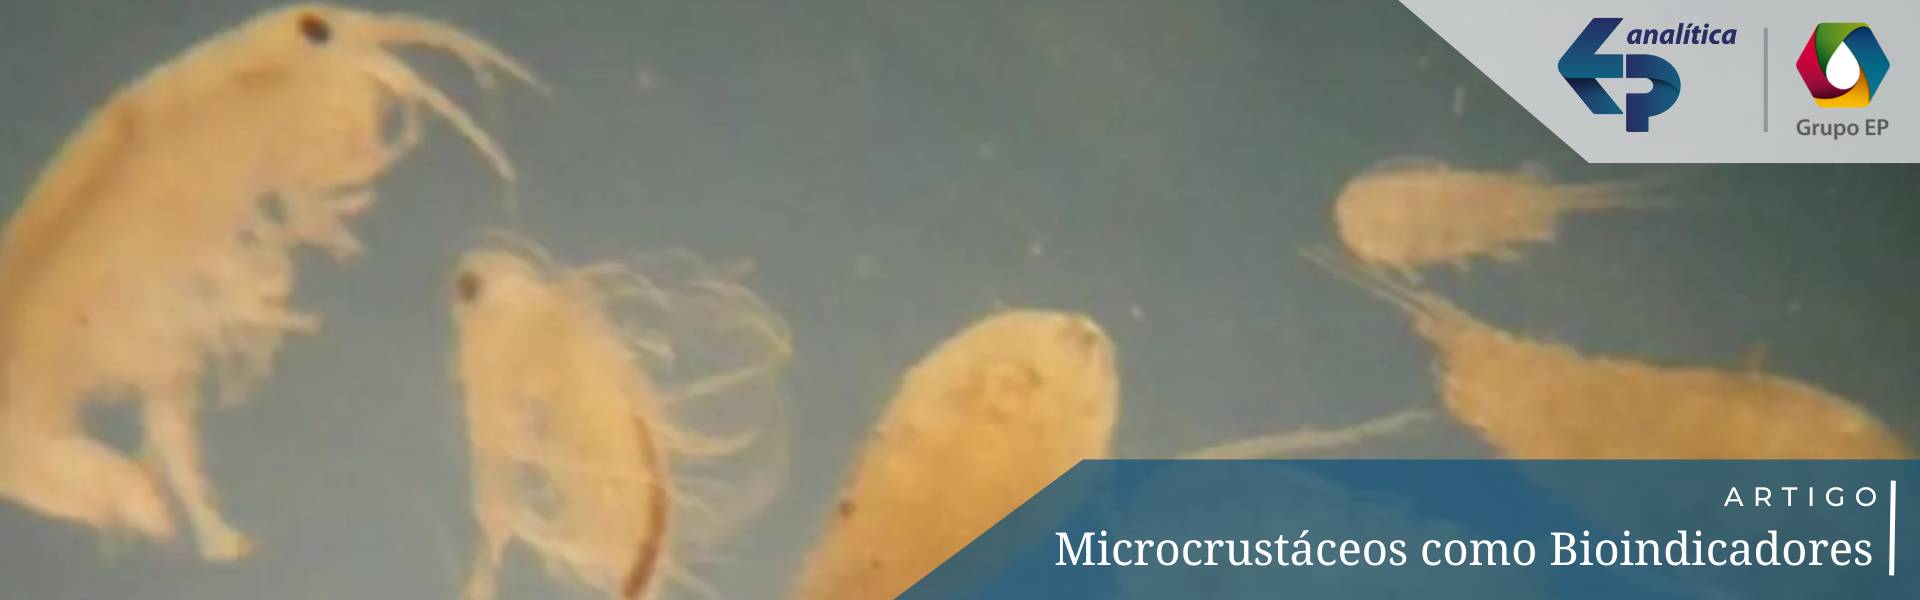 Banner microcrustáceos como bioindicadores